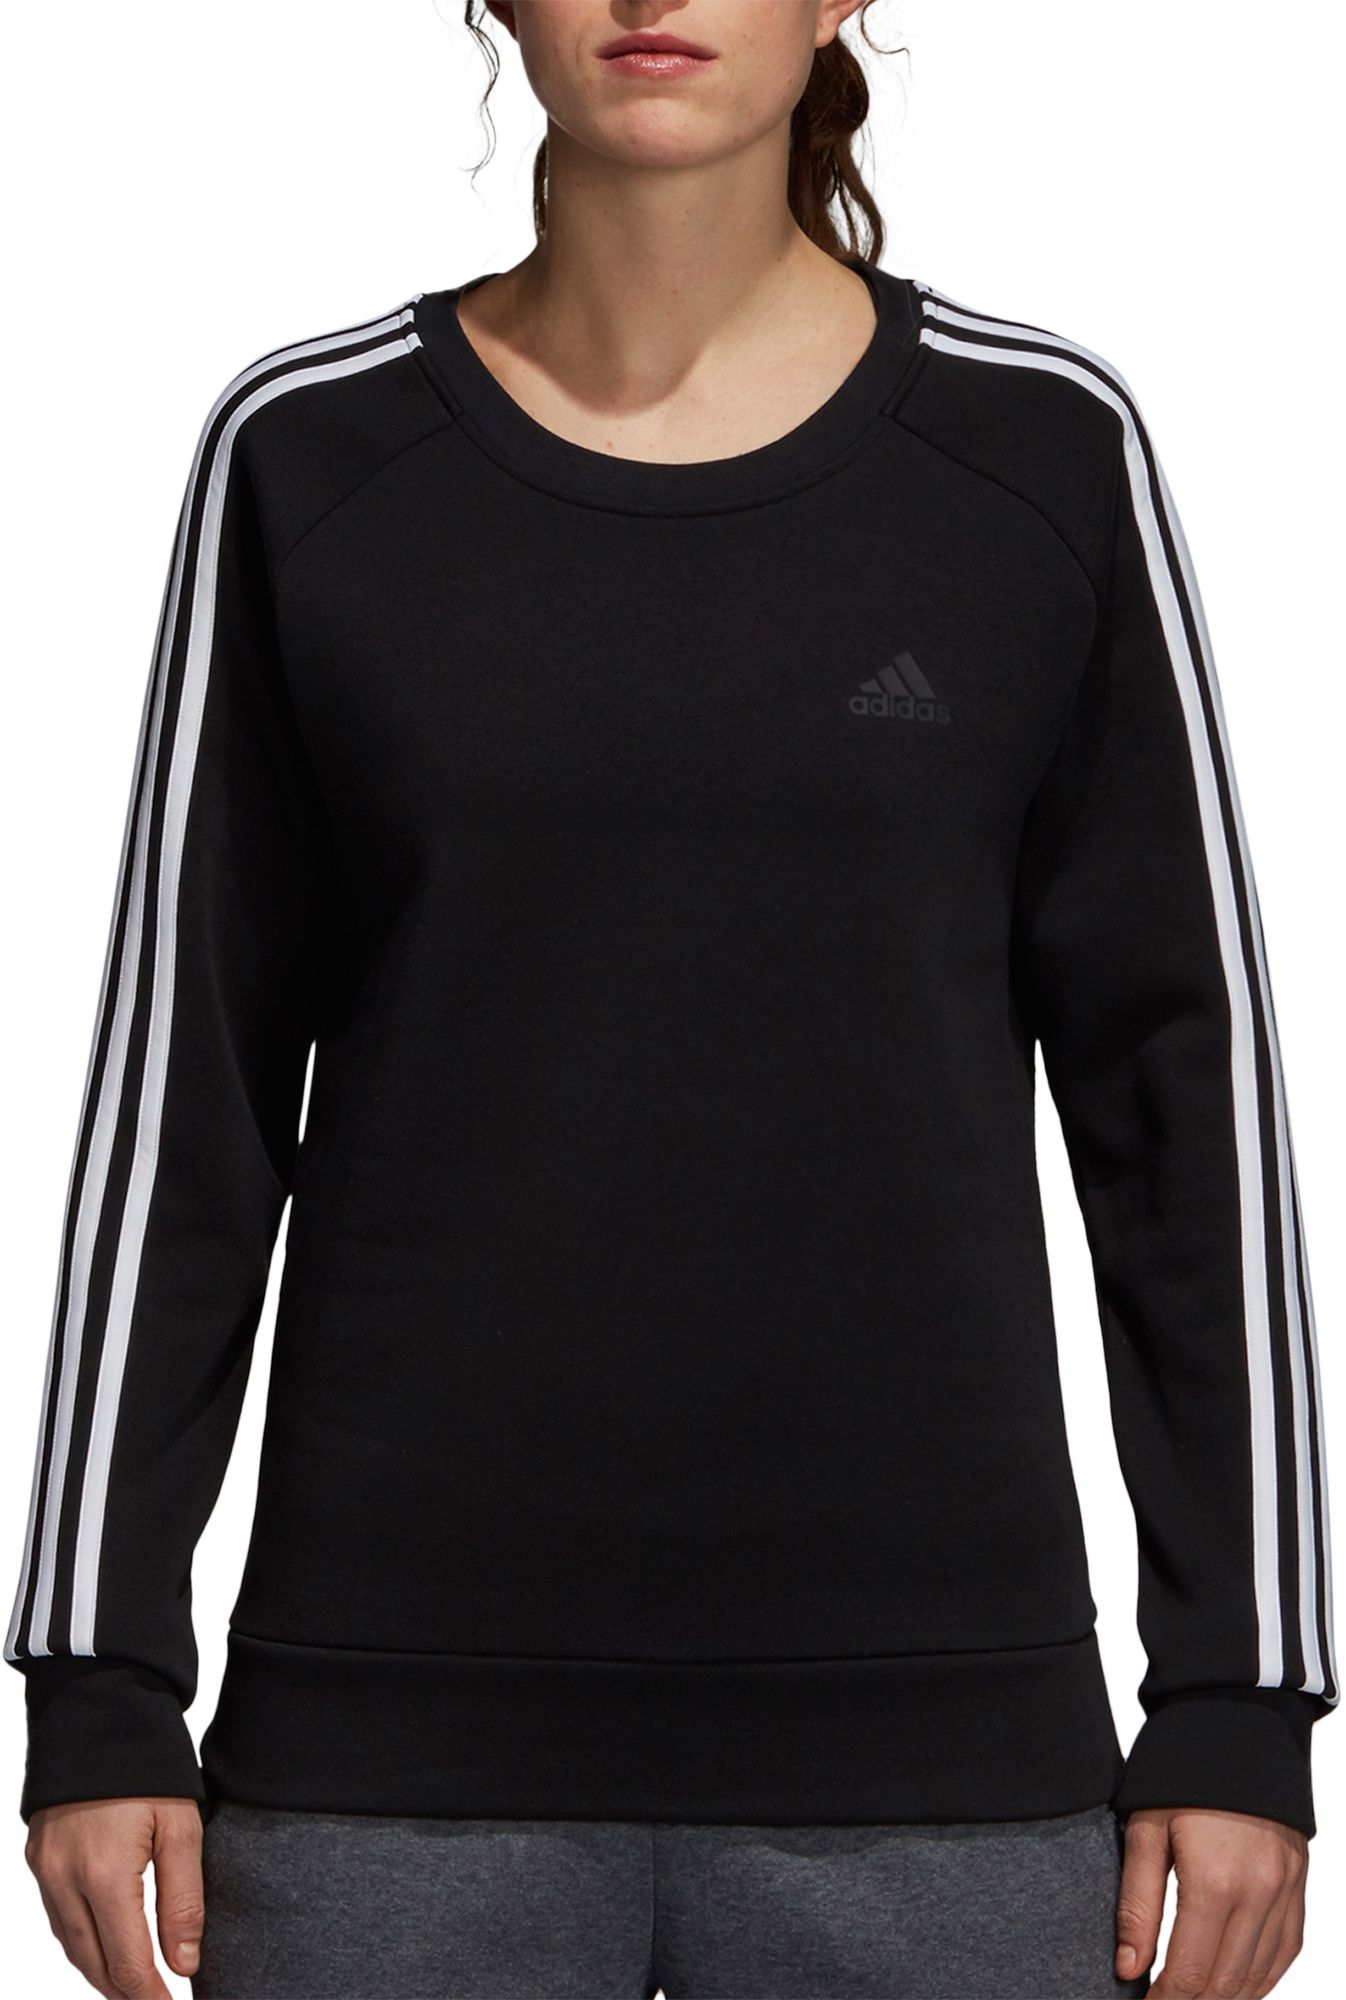 adidas 3 stripe black crew neck sweatshirt